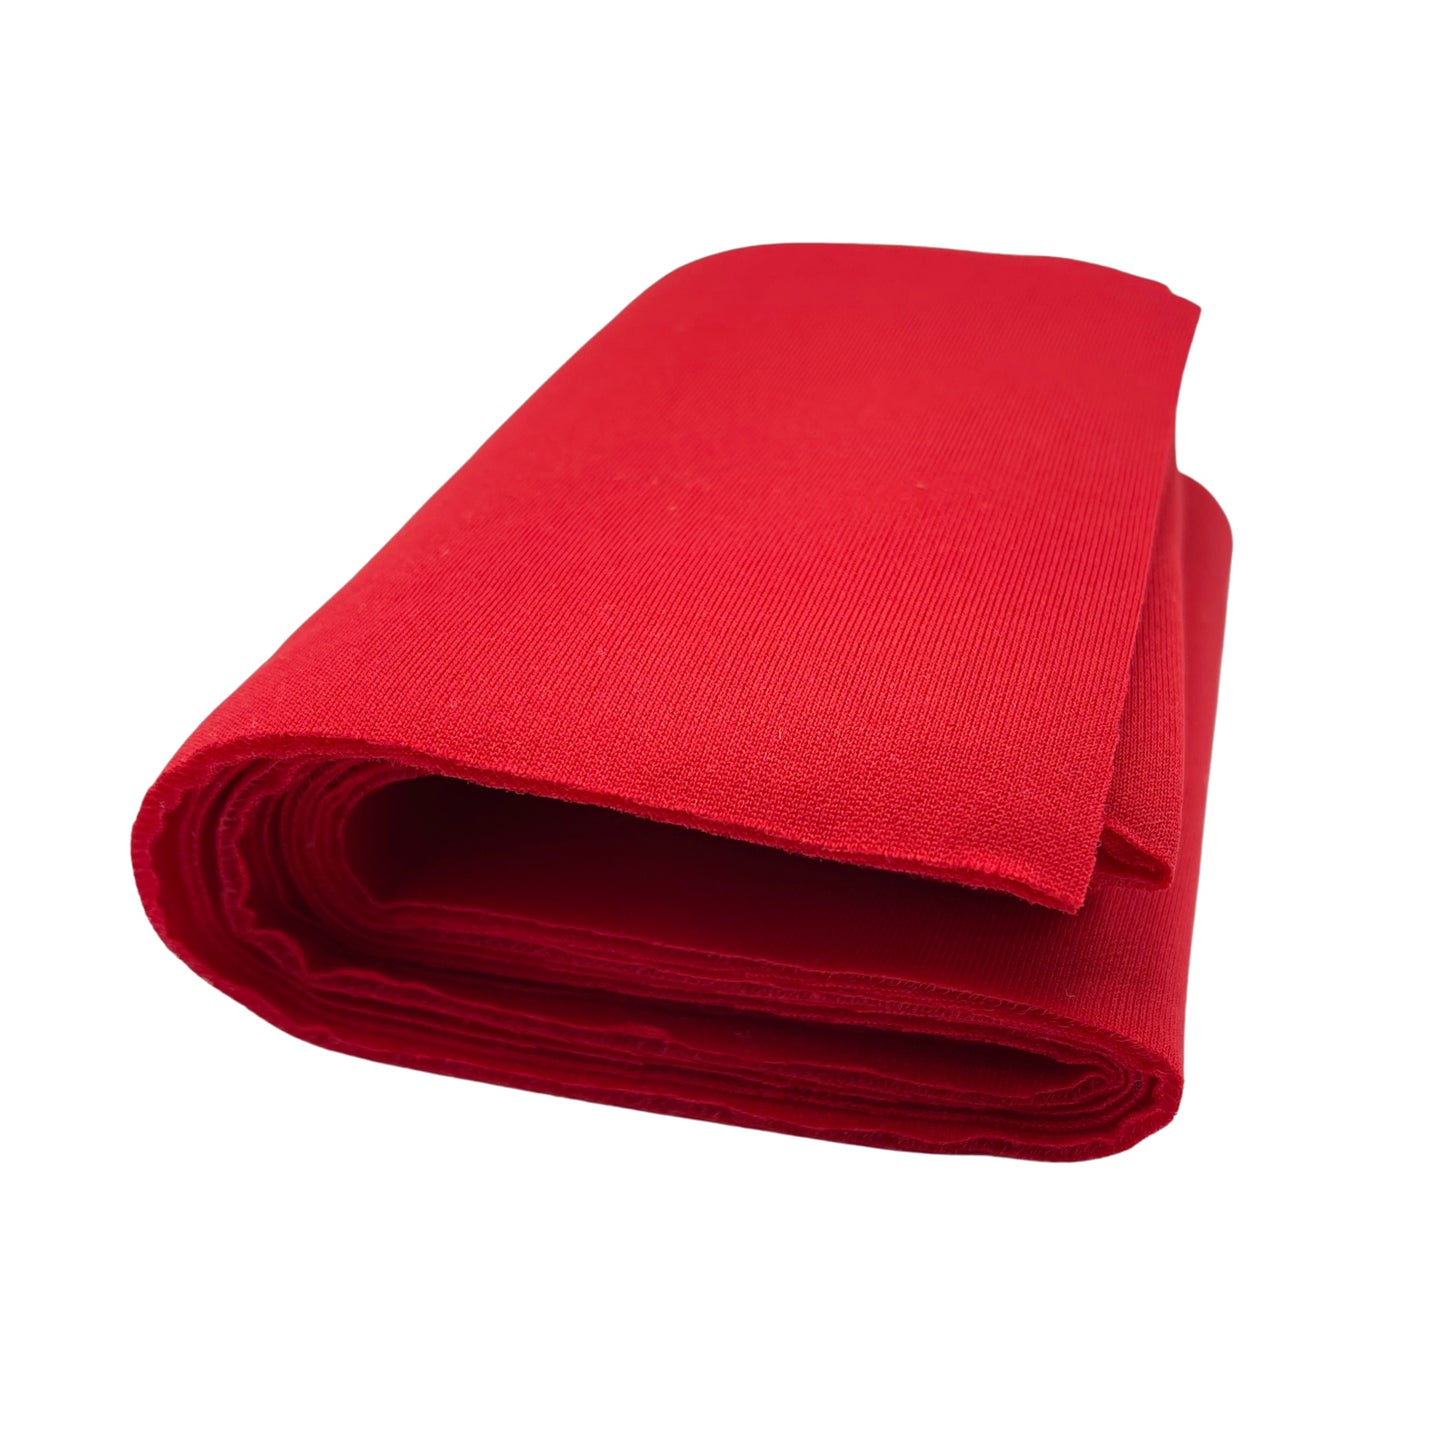 Red folded padded neoprene fabric strip.